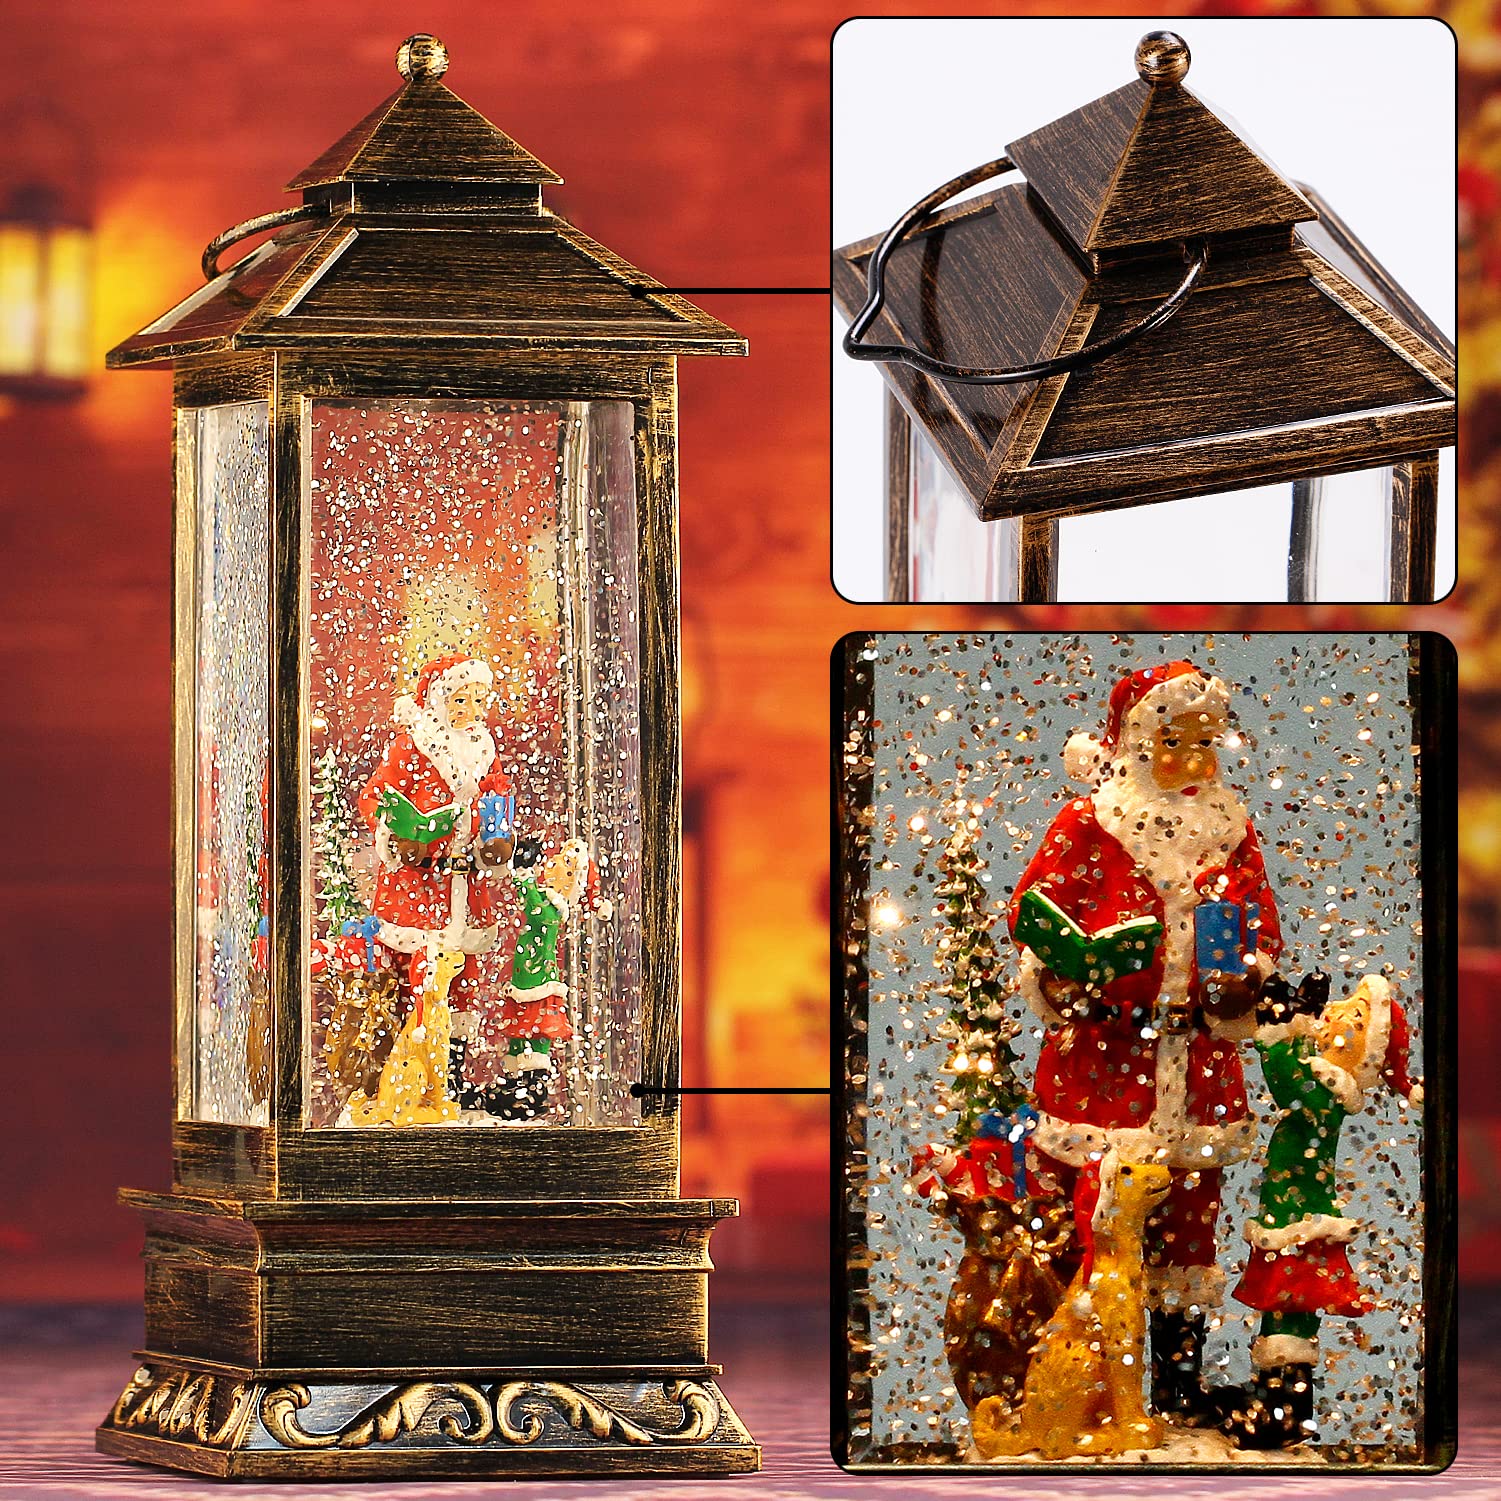 🌲Early Christmas Sale- SAVE 49% OFF🏠Color LED Christmas Crystal lights-Buy 2 Free Shipping